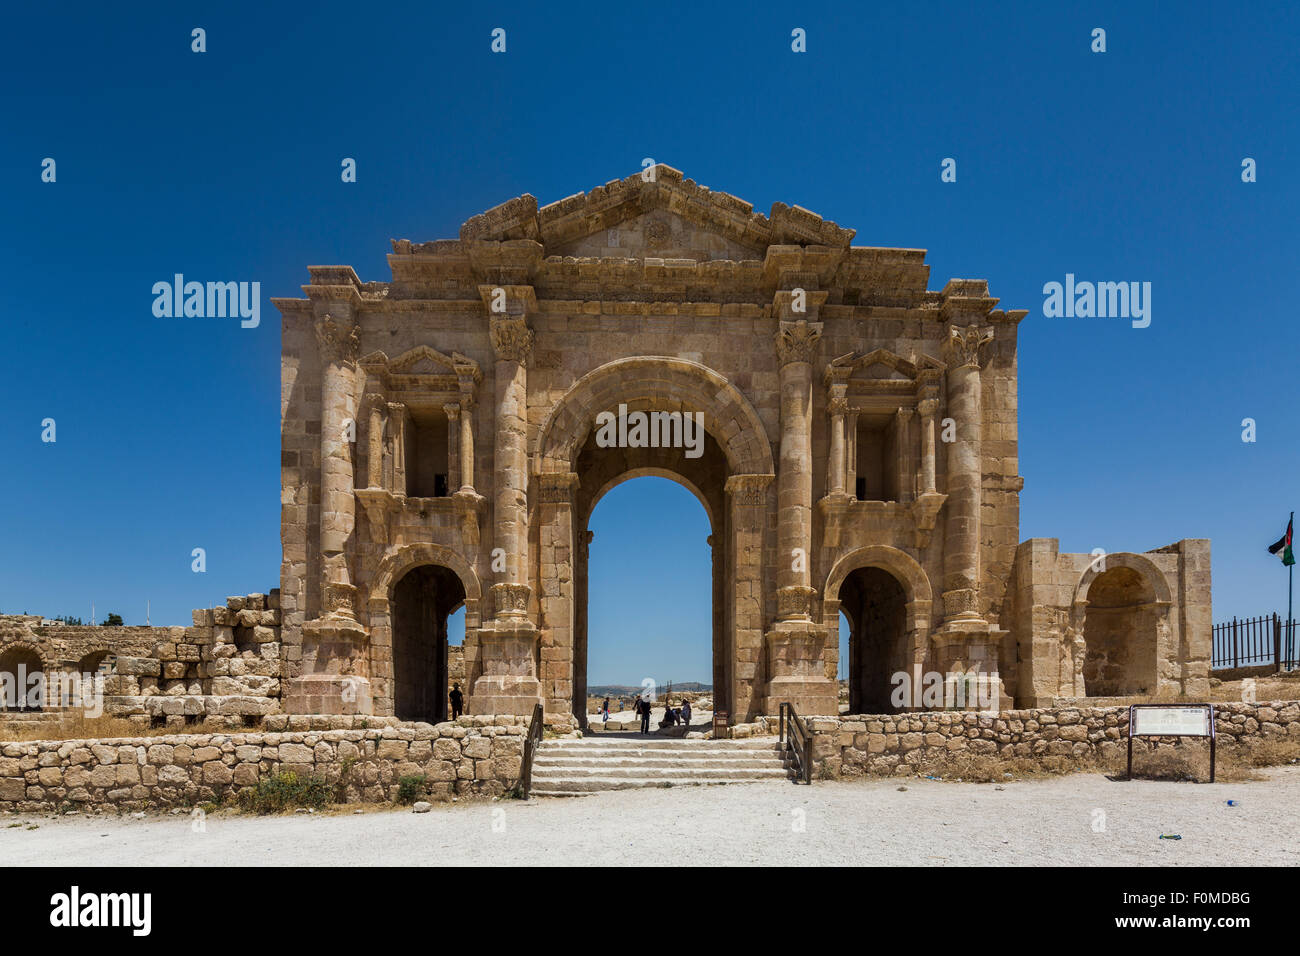 The Arch of Hadrian, Jerash, Jordan Stock Photo